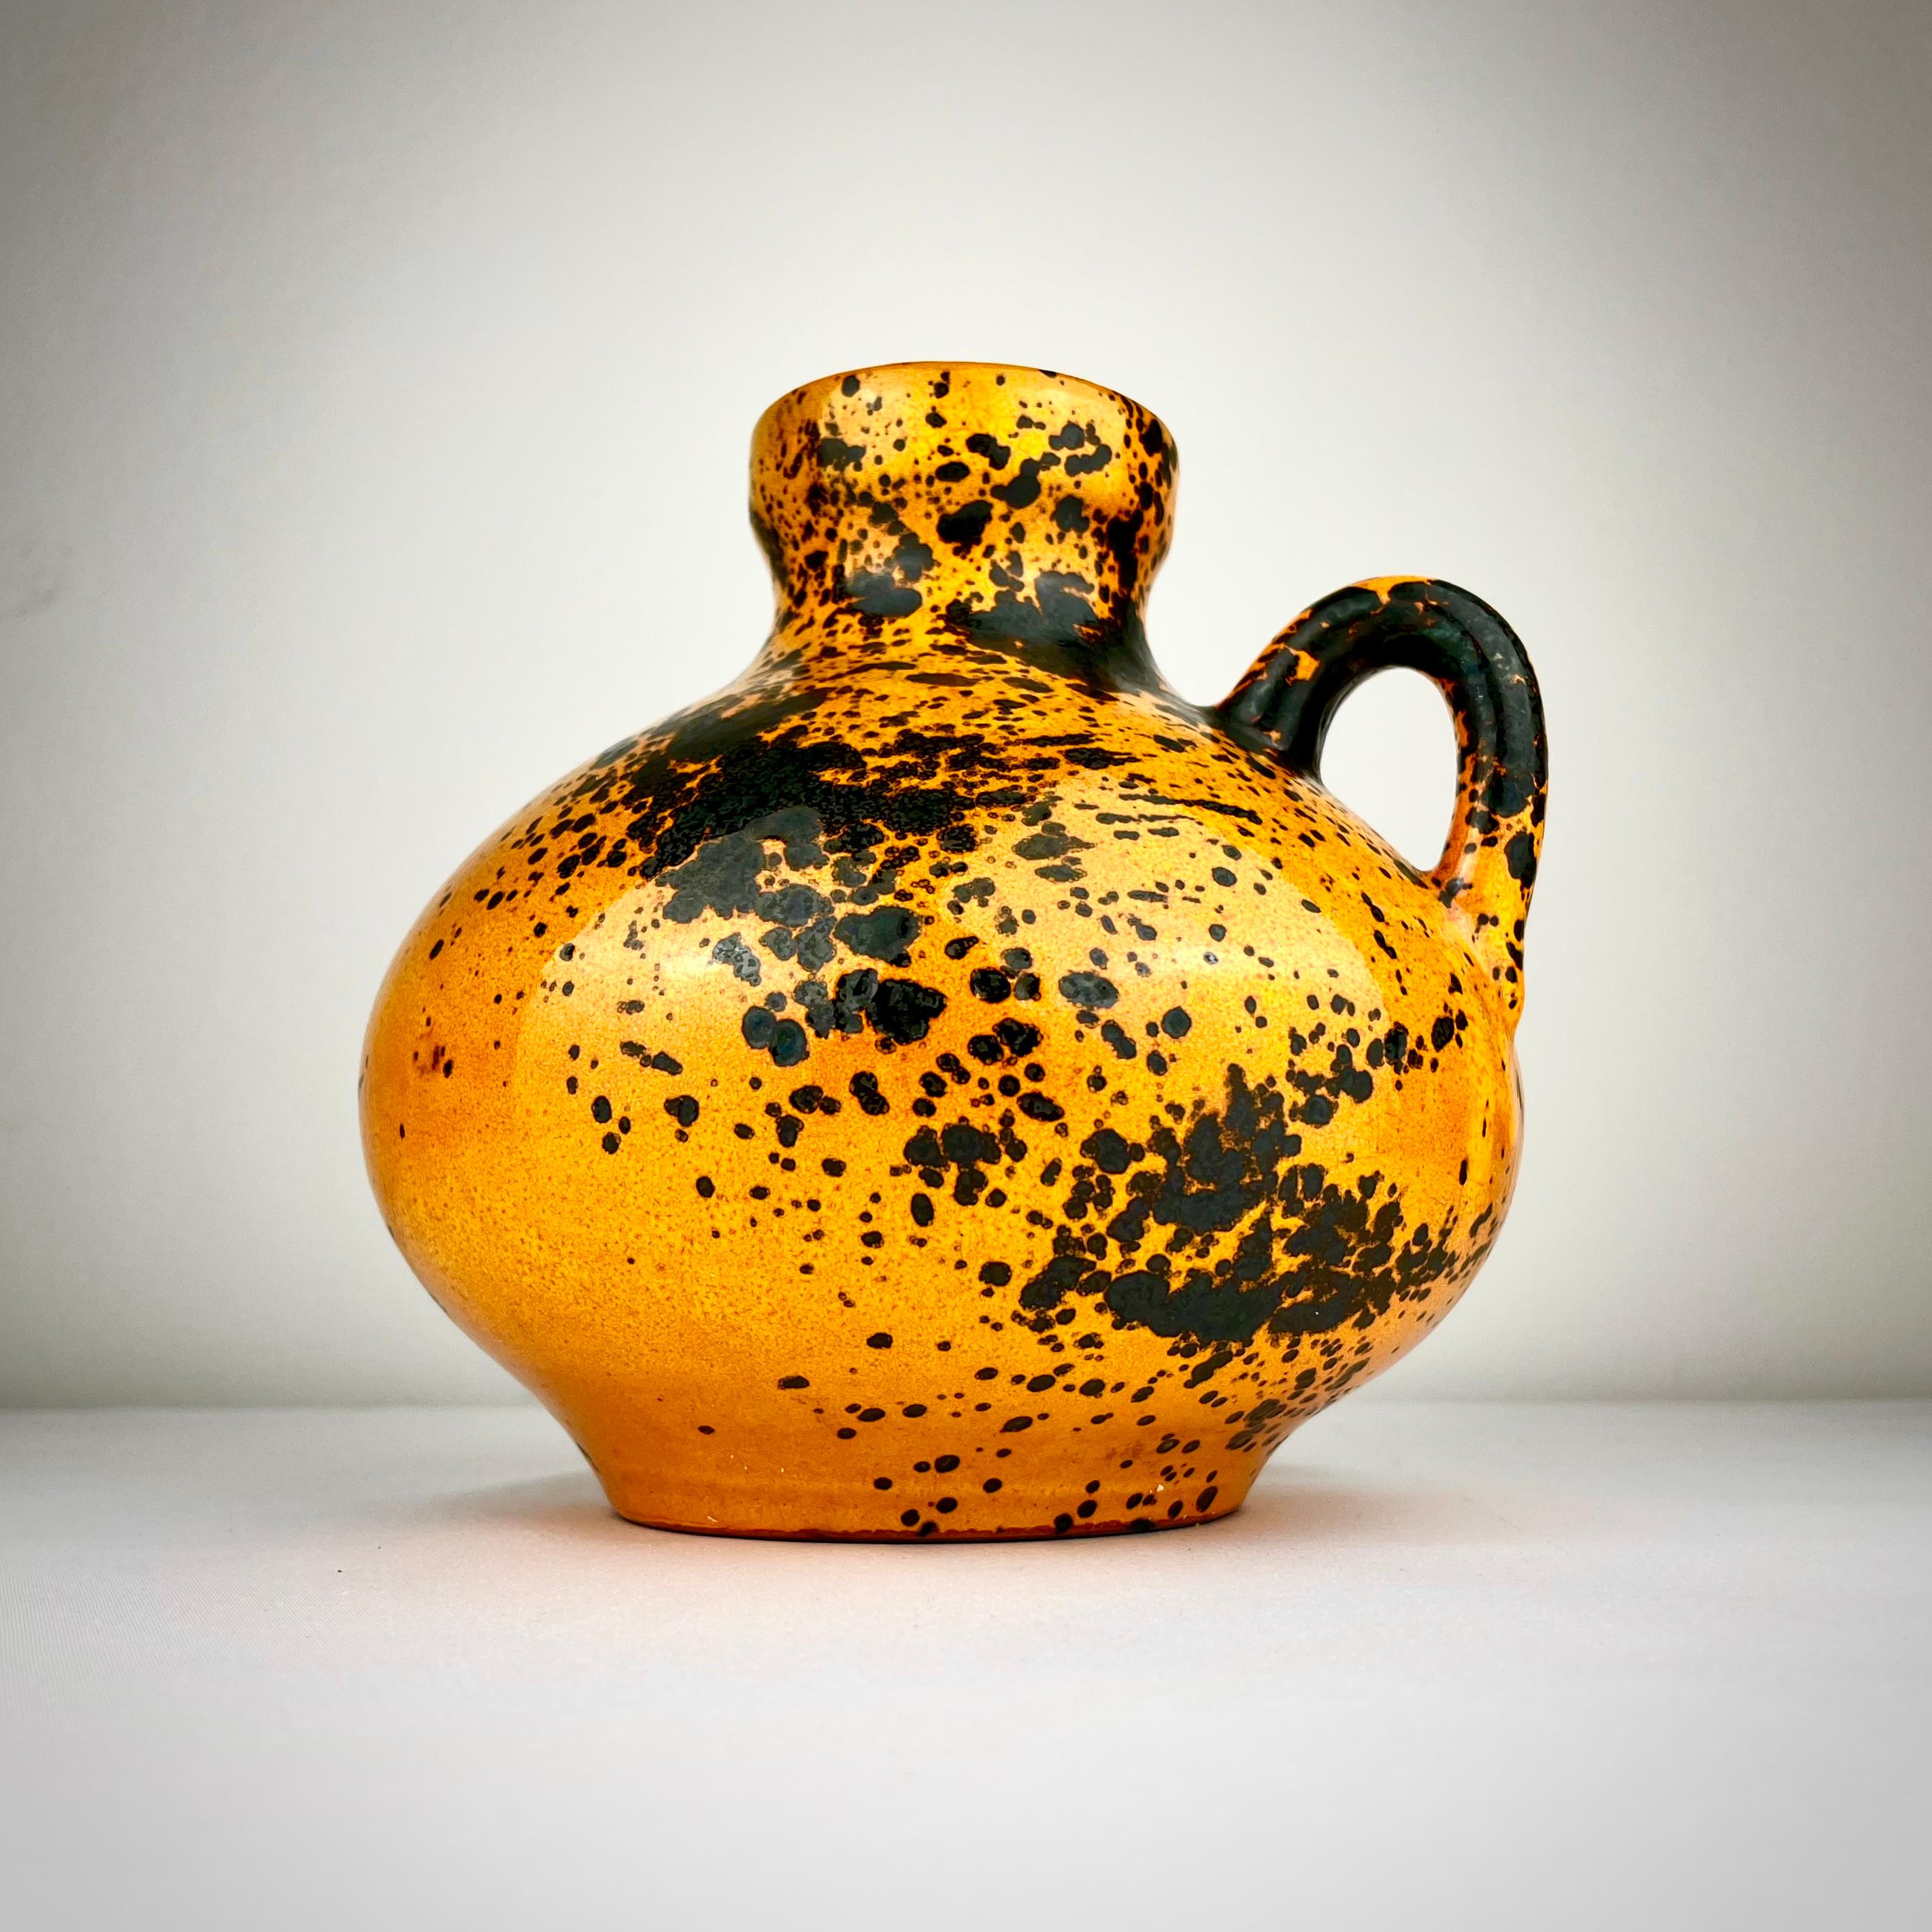 Marei Keramik 4302 West German Vase Jug 1960s Yellow West German Pottery WGC For Sale 2